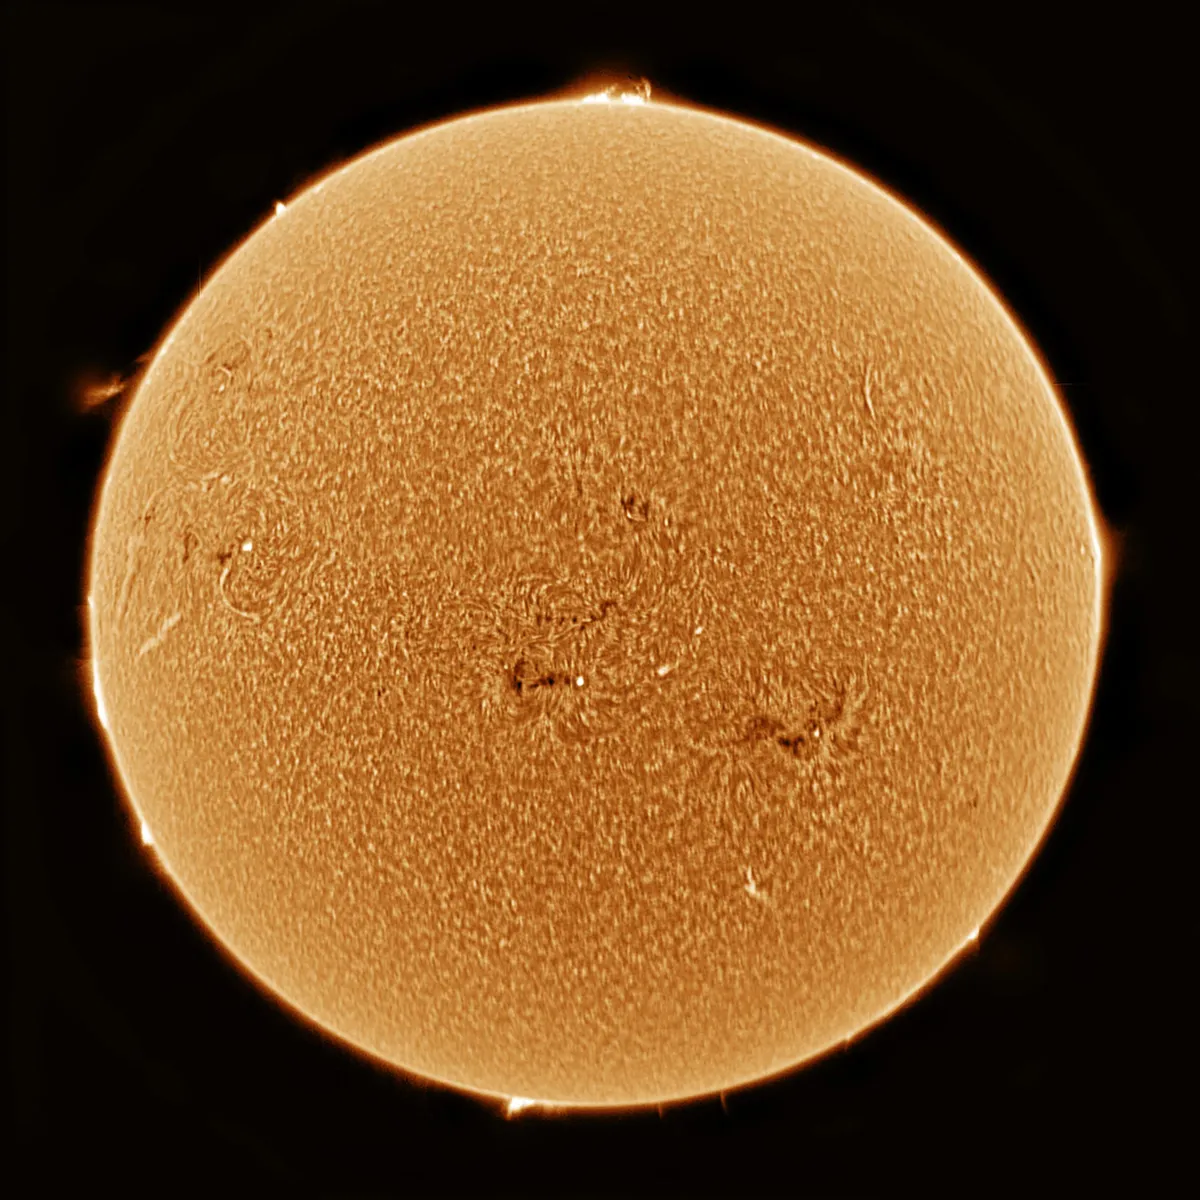 The Sun in Hydrogen-Alpha by Bill McSorley, Leeds, UK. Equipment: TeleVue Pronto, Coronado Ha Filters, Celestron 5e Alt/Az Mount.